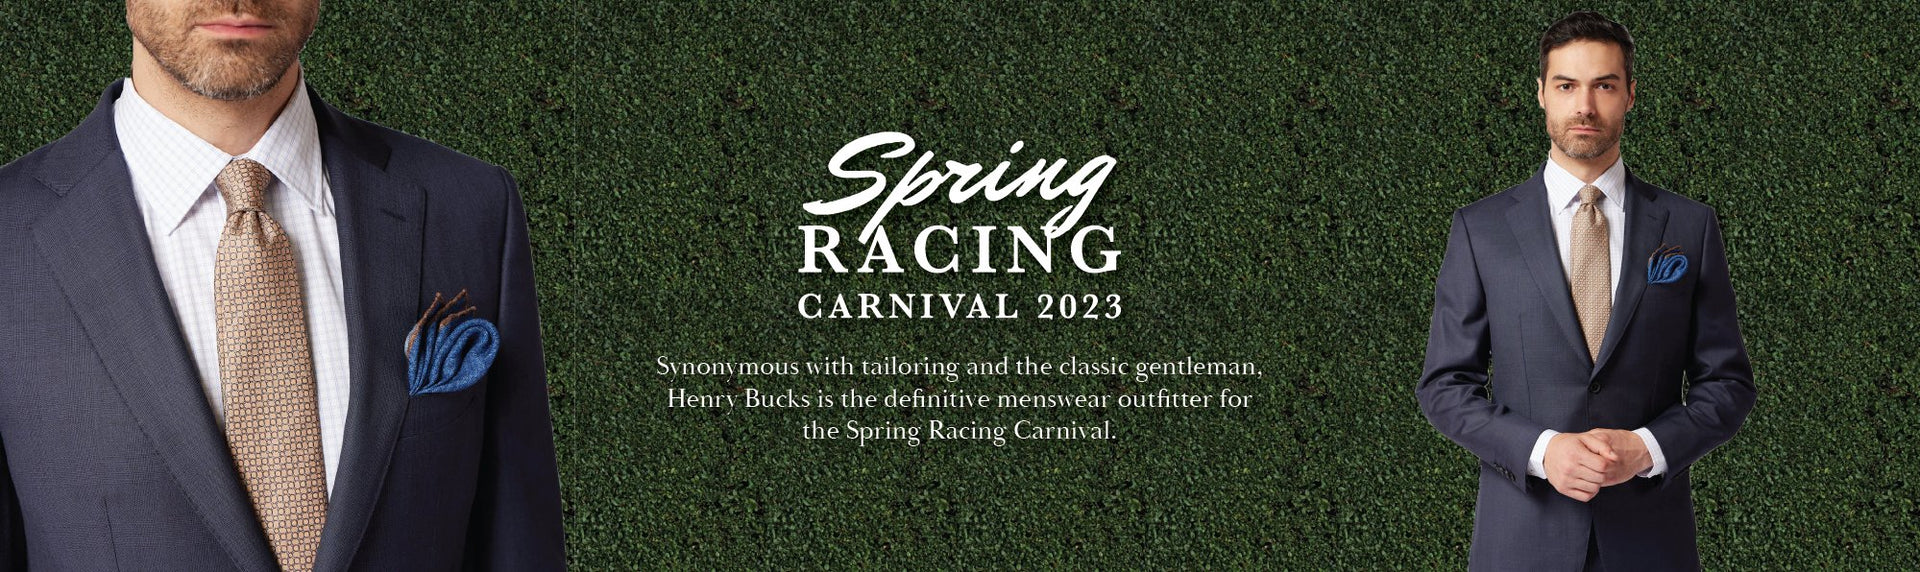 Spring Racing Carnival 2023